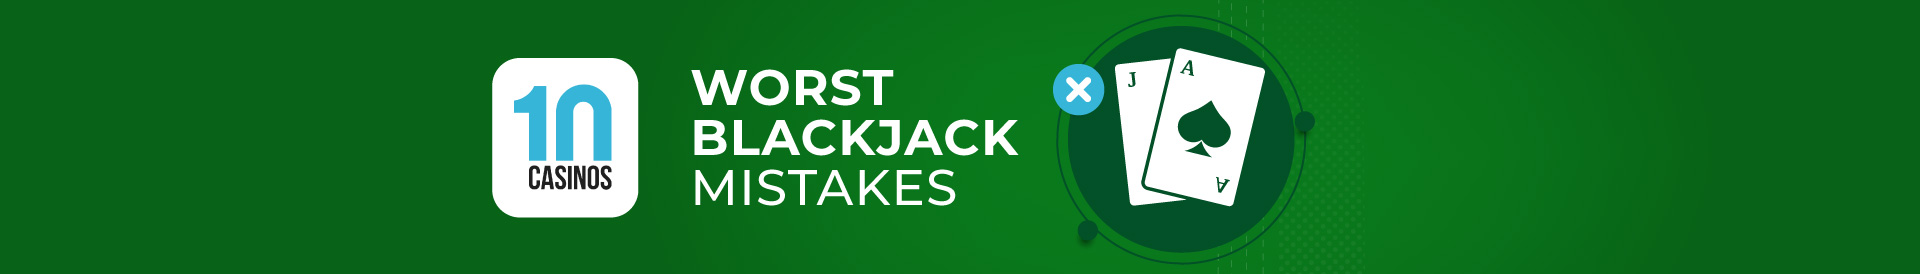 top 10 worst blackjack mistakes desktop